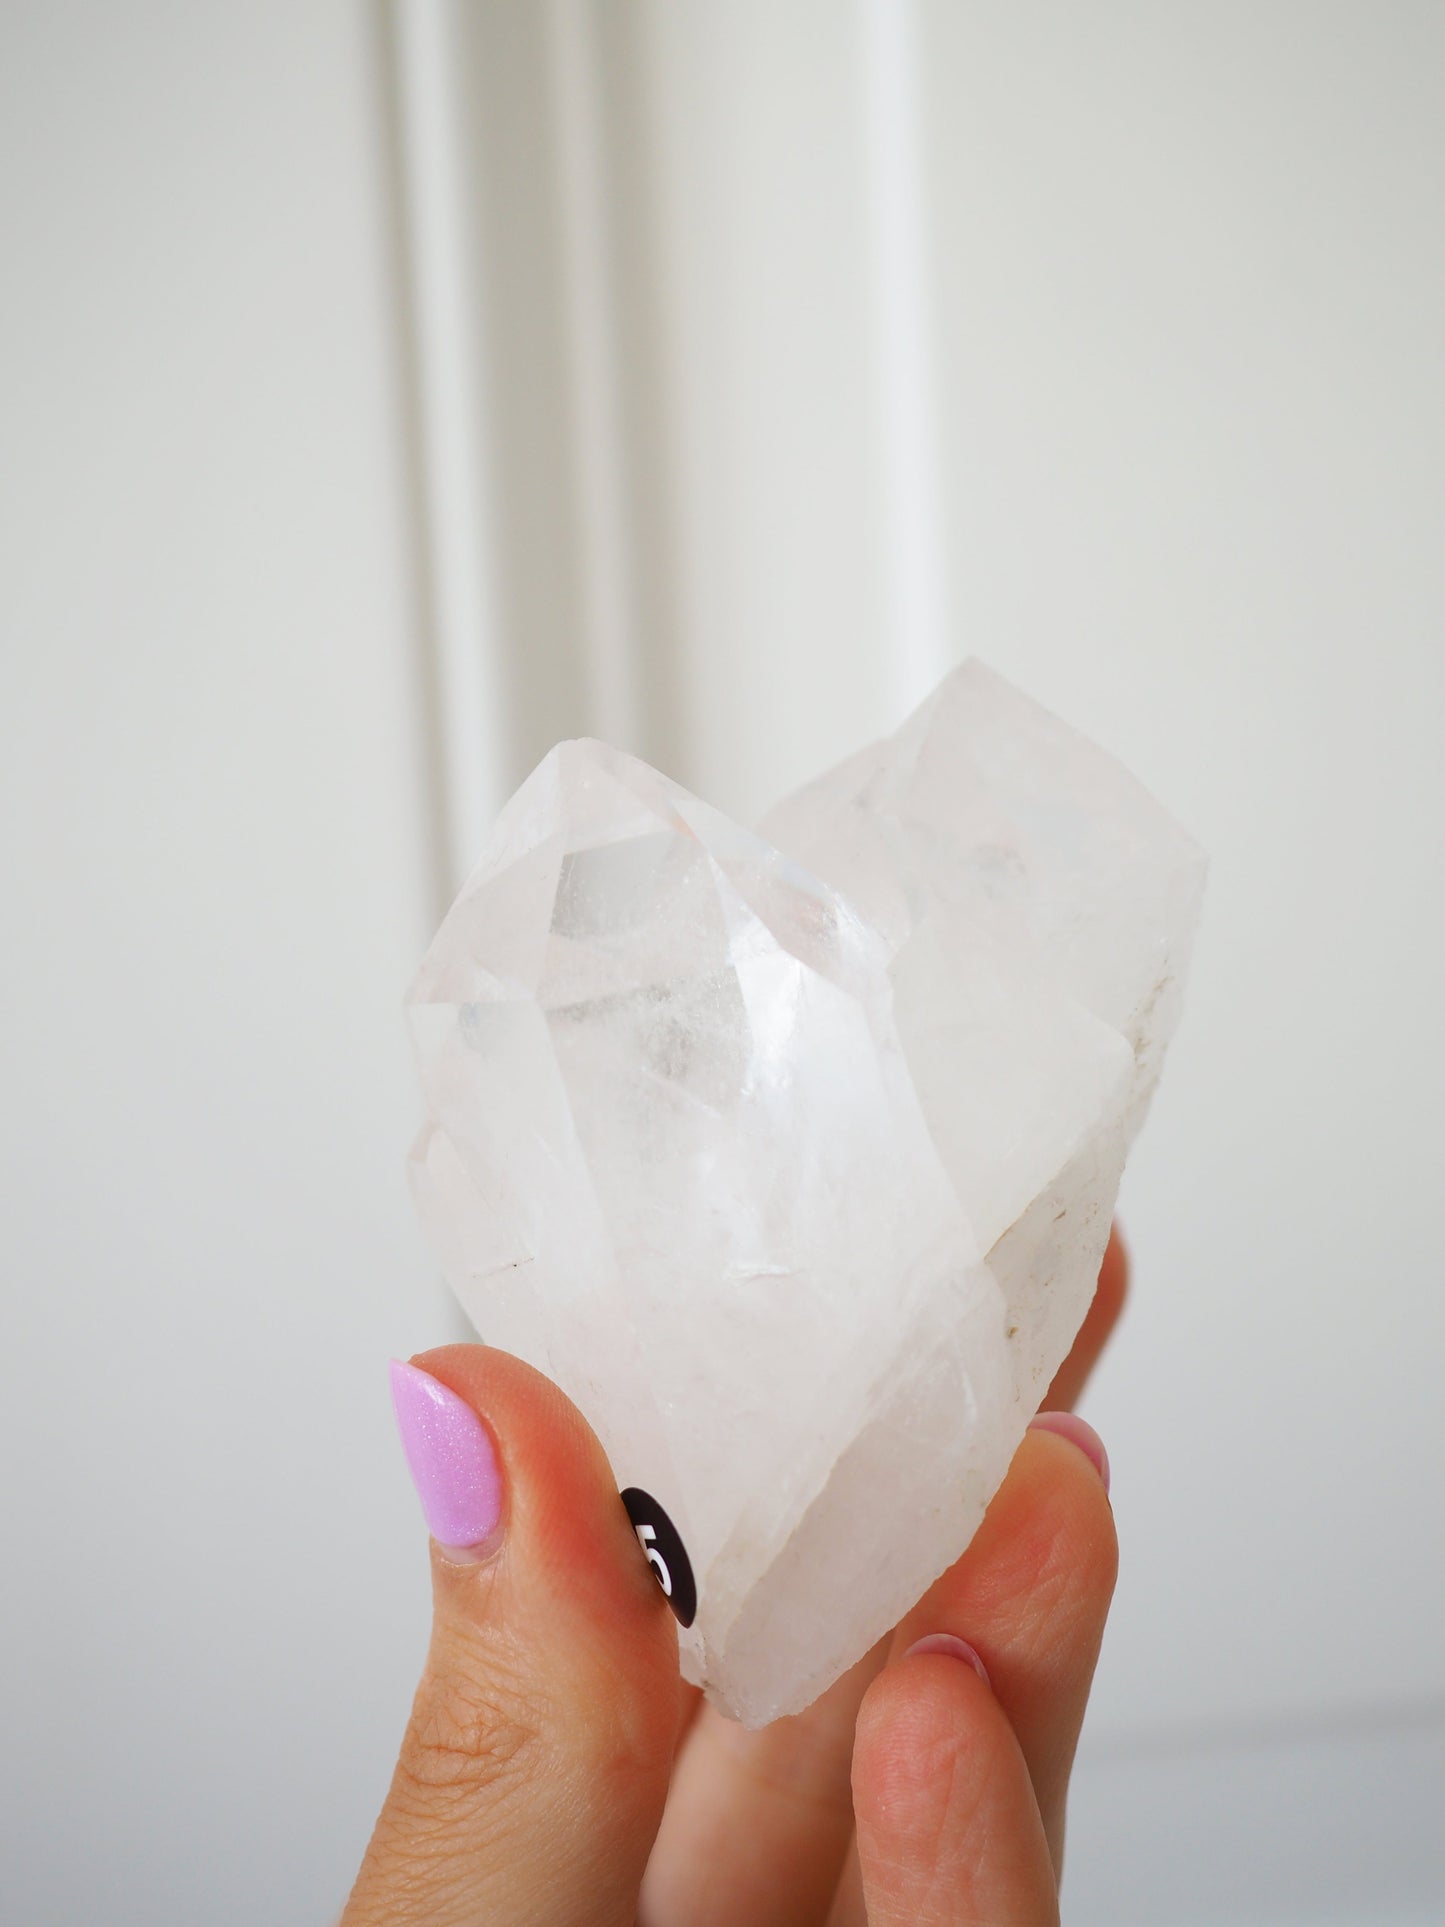 Bergkristall Cluster ca 7.5cm [5] - aus Minas Gerais Brasilien HIGH QUALITY